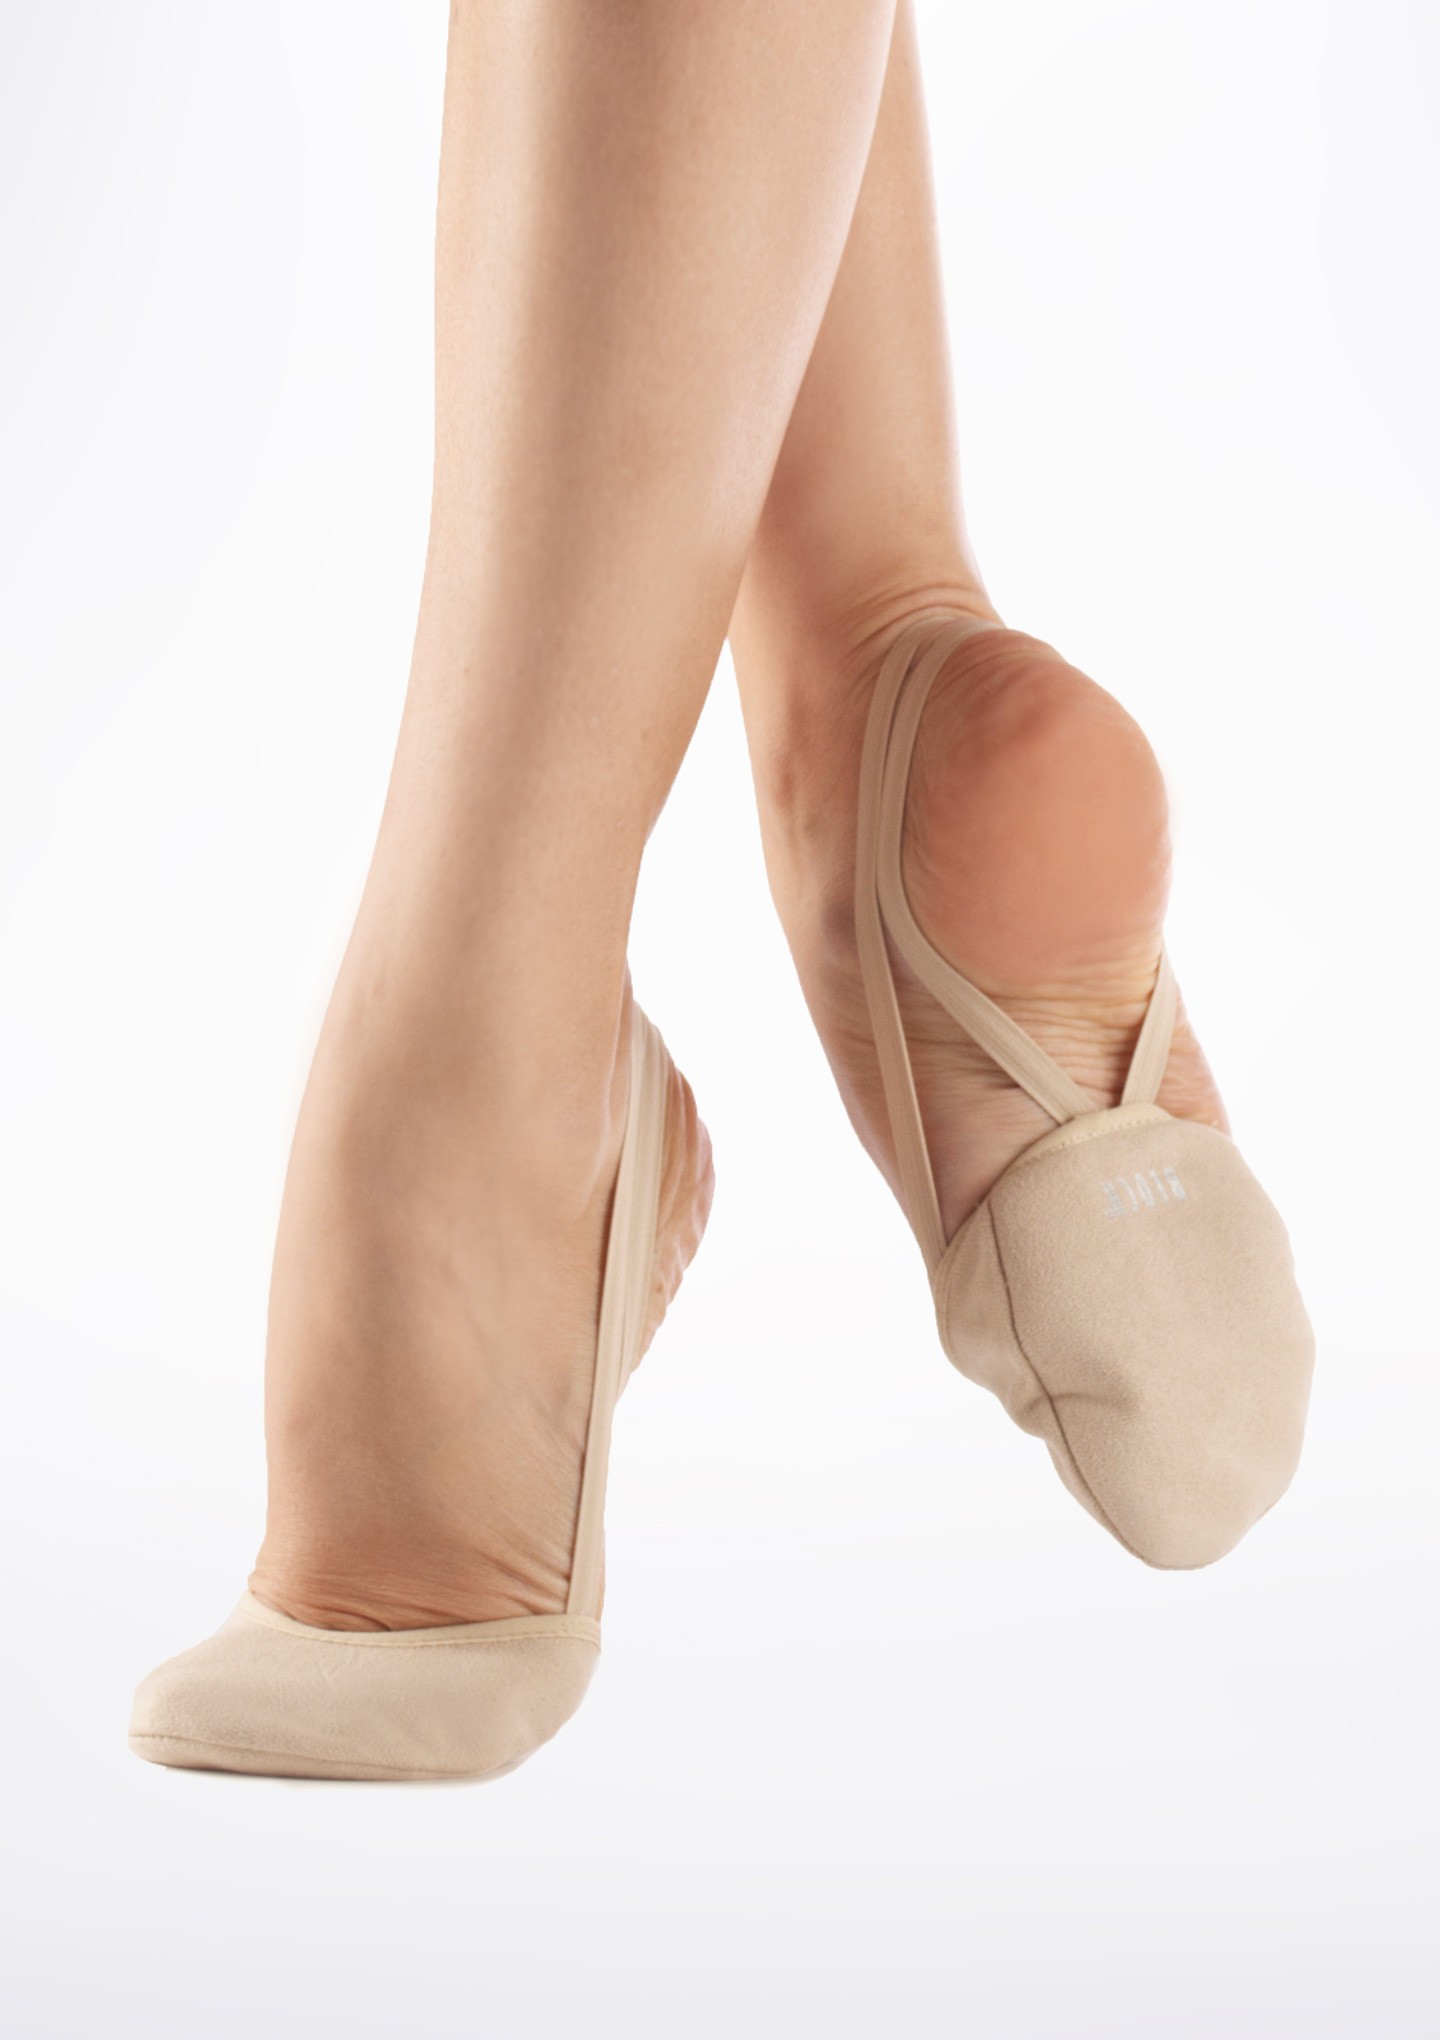 contemporary dance footwear